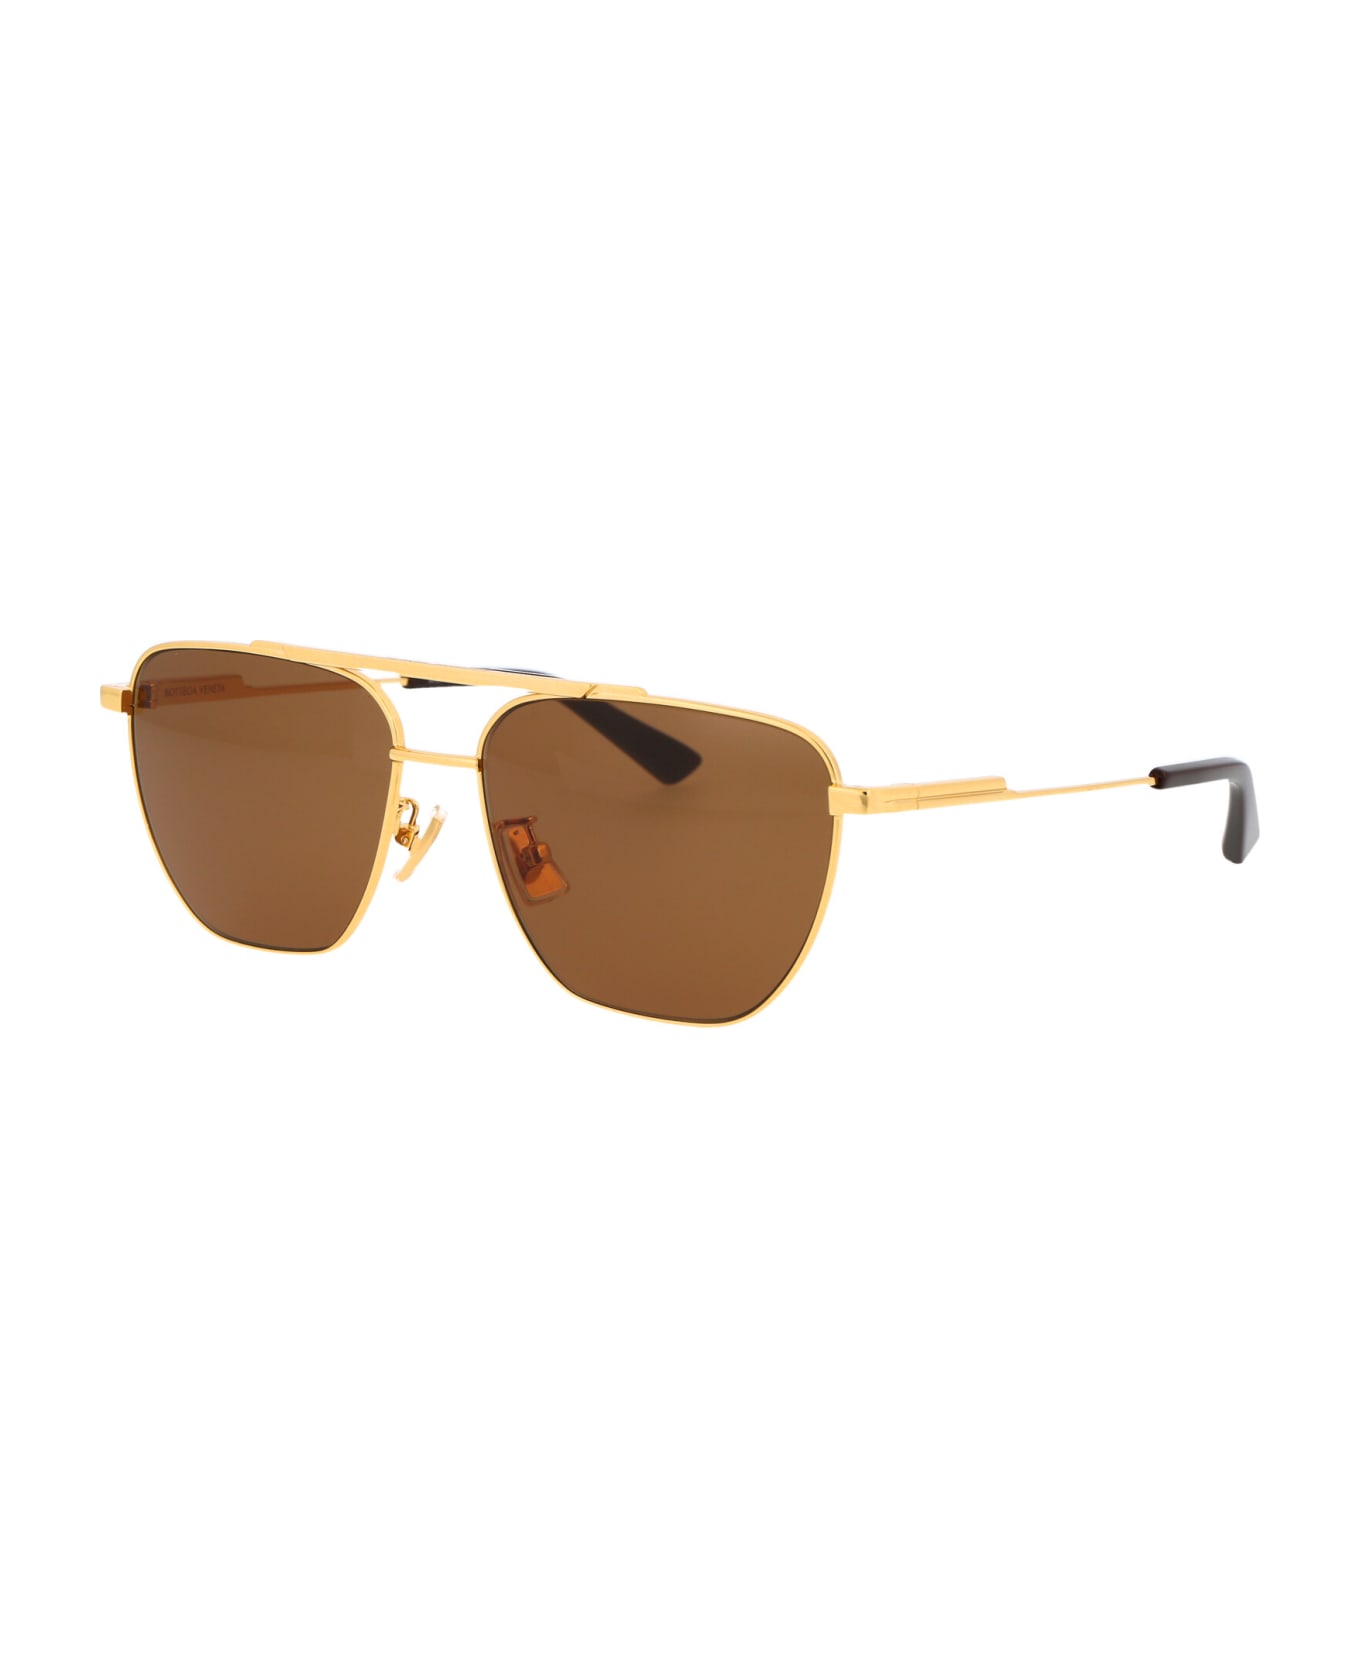 Bottega Veneta Eyewear Bv1236s Sunglasses - 002 GOLD GOLD BROWN